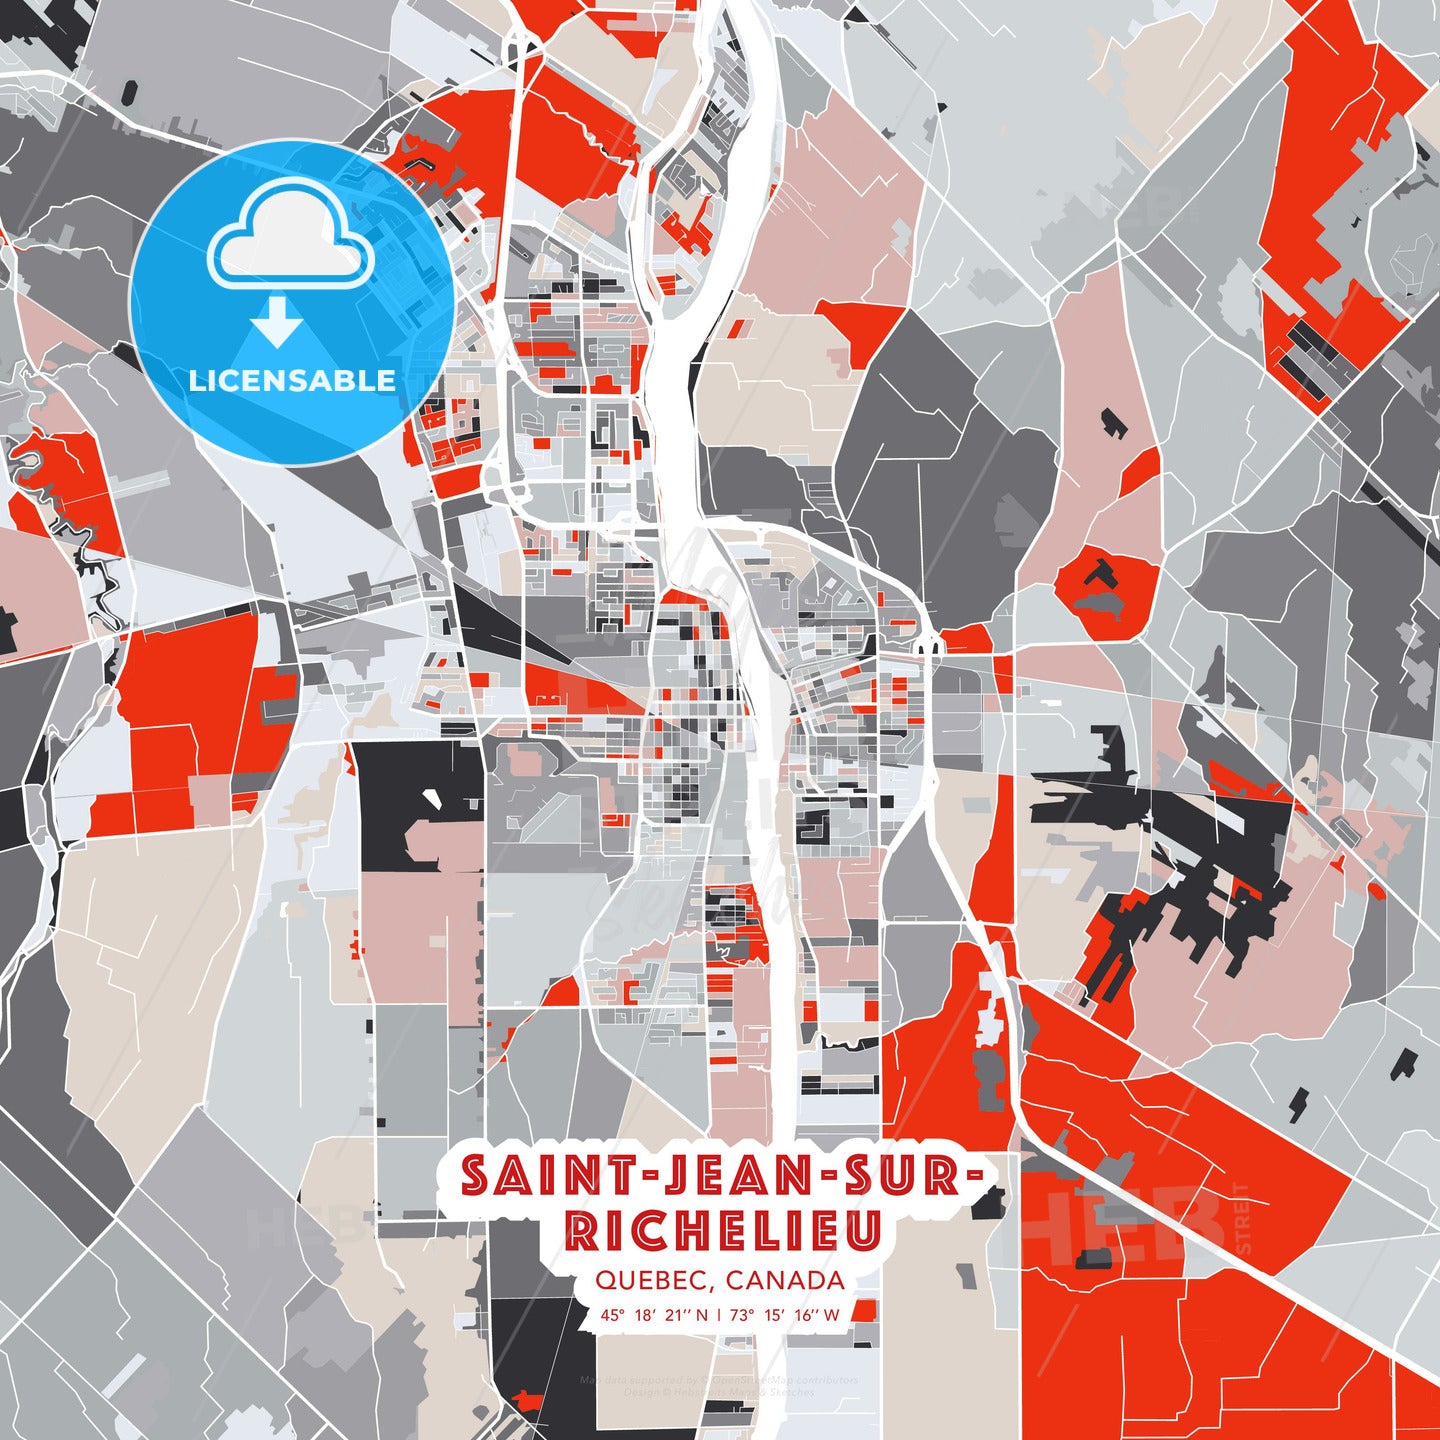 Saint-Jean-sur-Richelieu, Quebec, Canada, modern map - HEBSTREITS Sketches